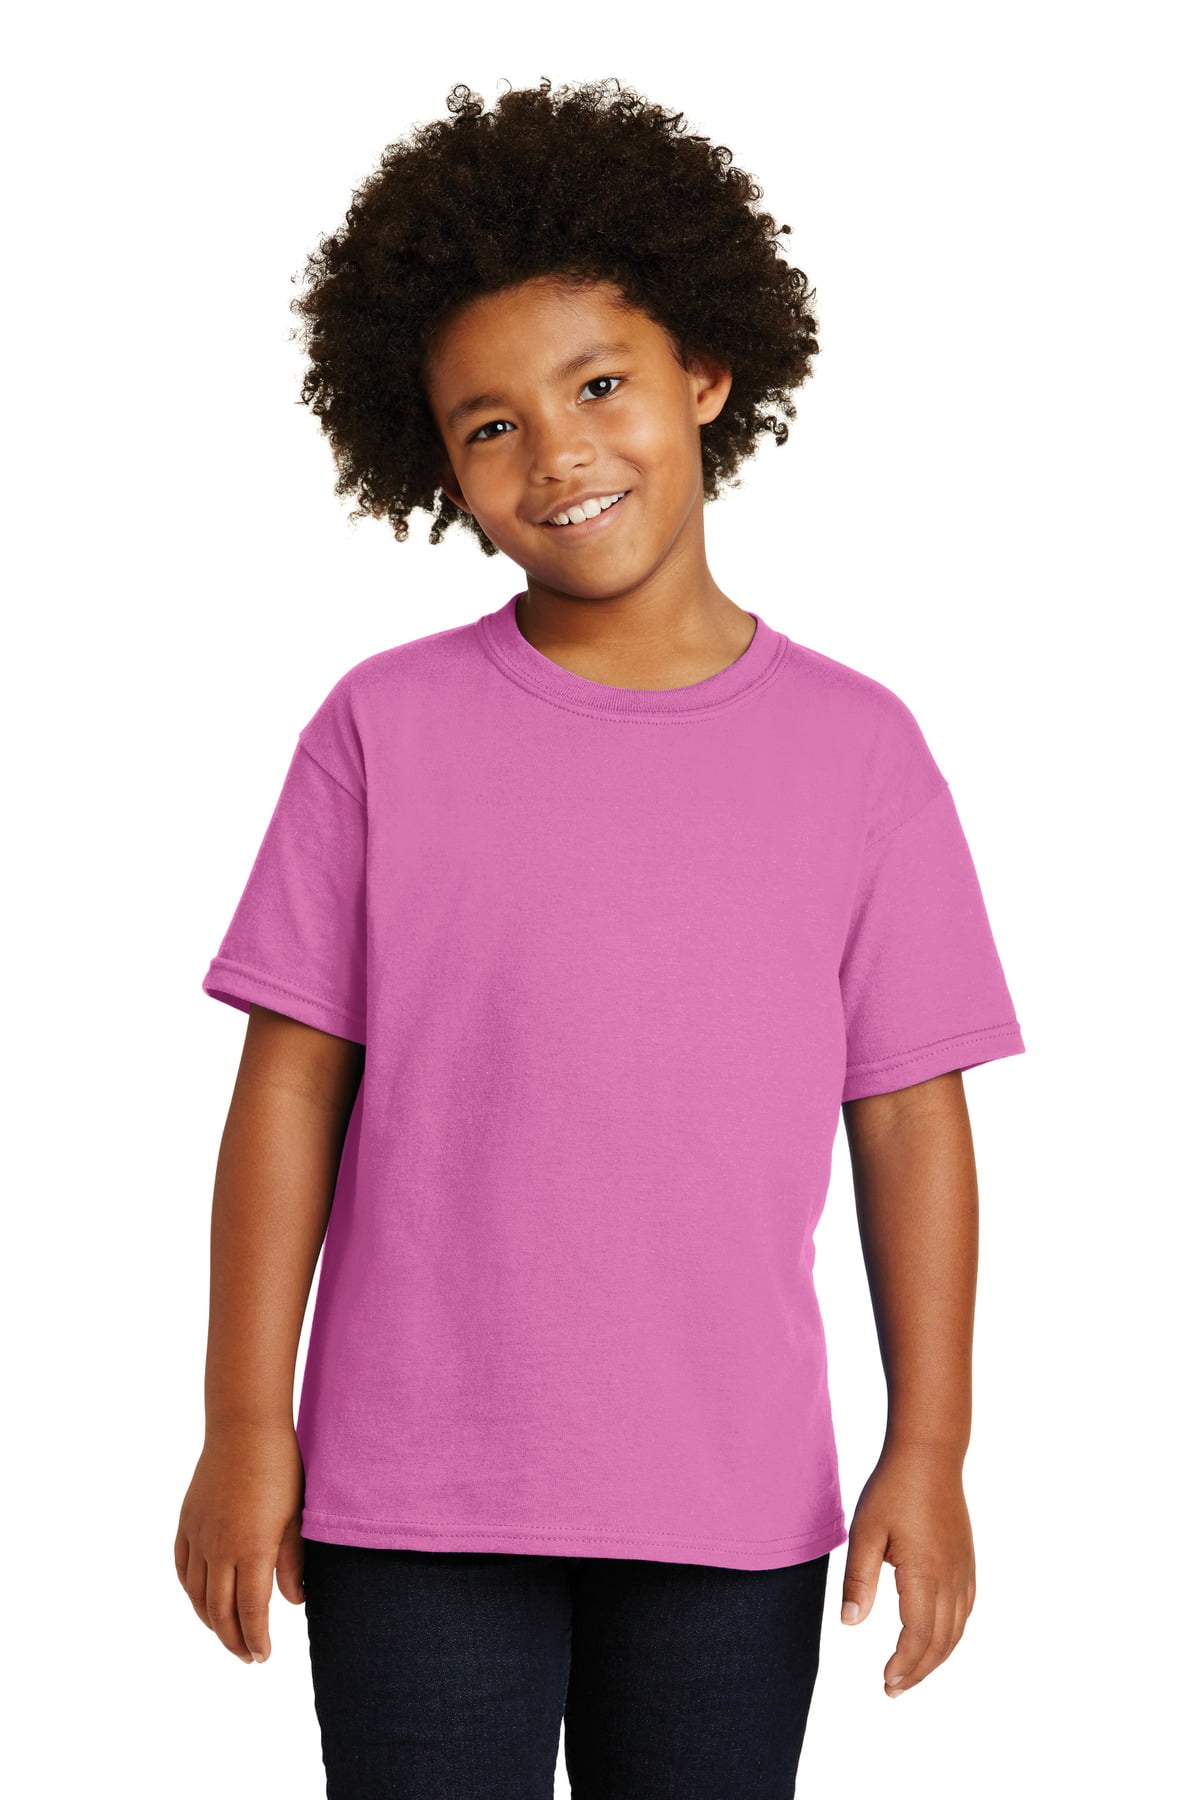 Gildan GD05B Heavy Cotton Youth T-shirt Kids Plain Crew Neck Half Sleeves Tshirt 